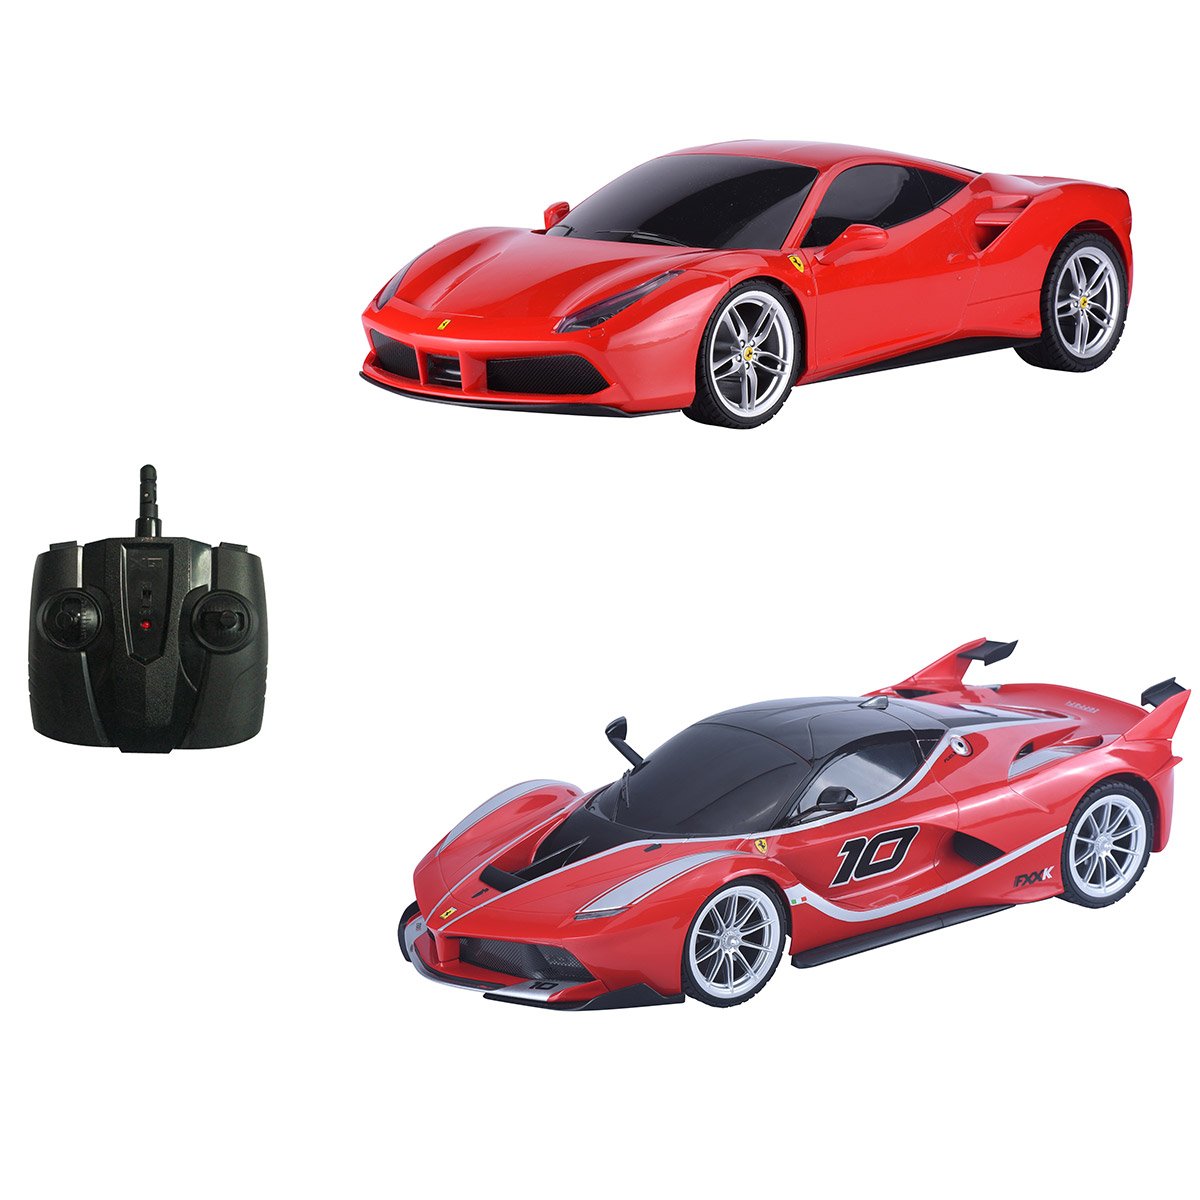  Voiture  radiocommand e Ferrari Echelle 1  32  Par ge 